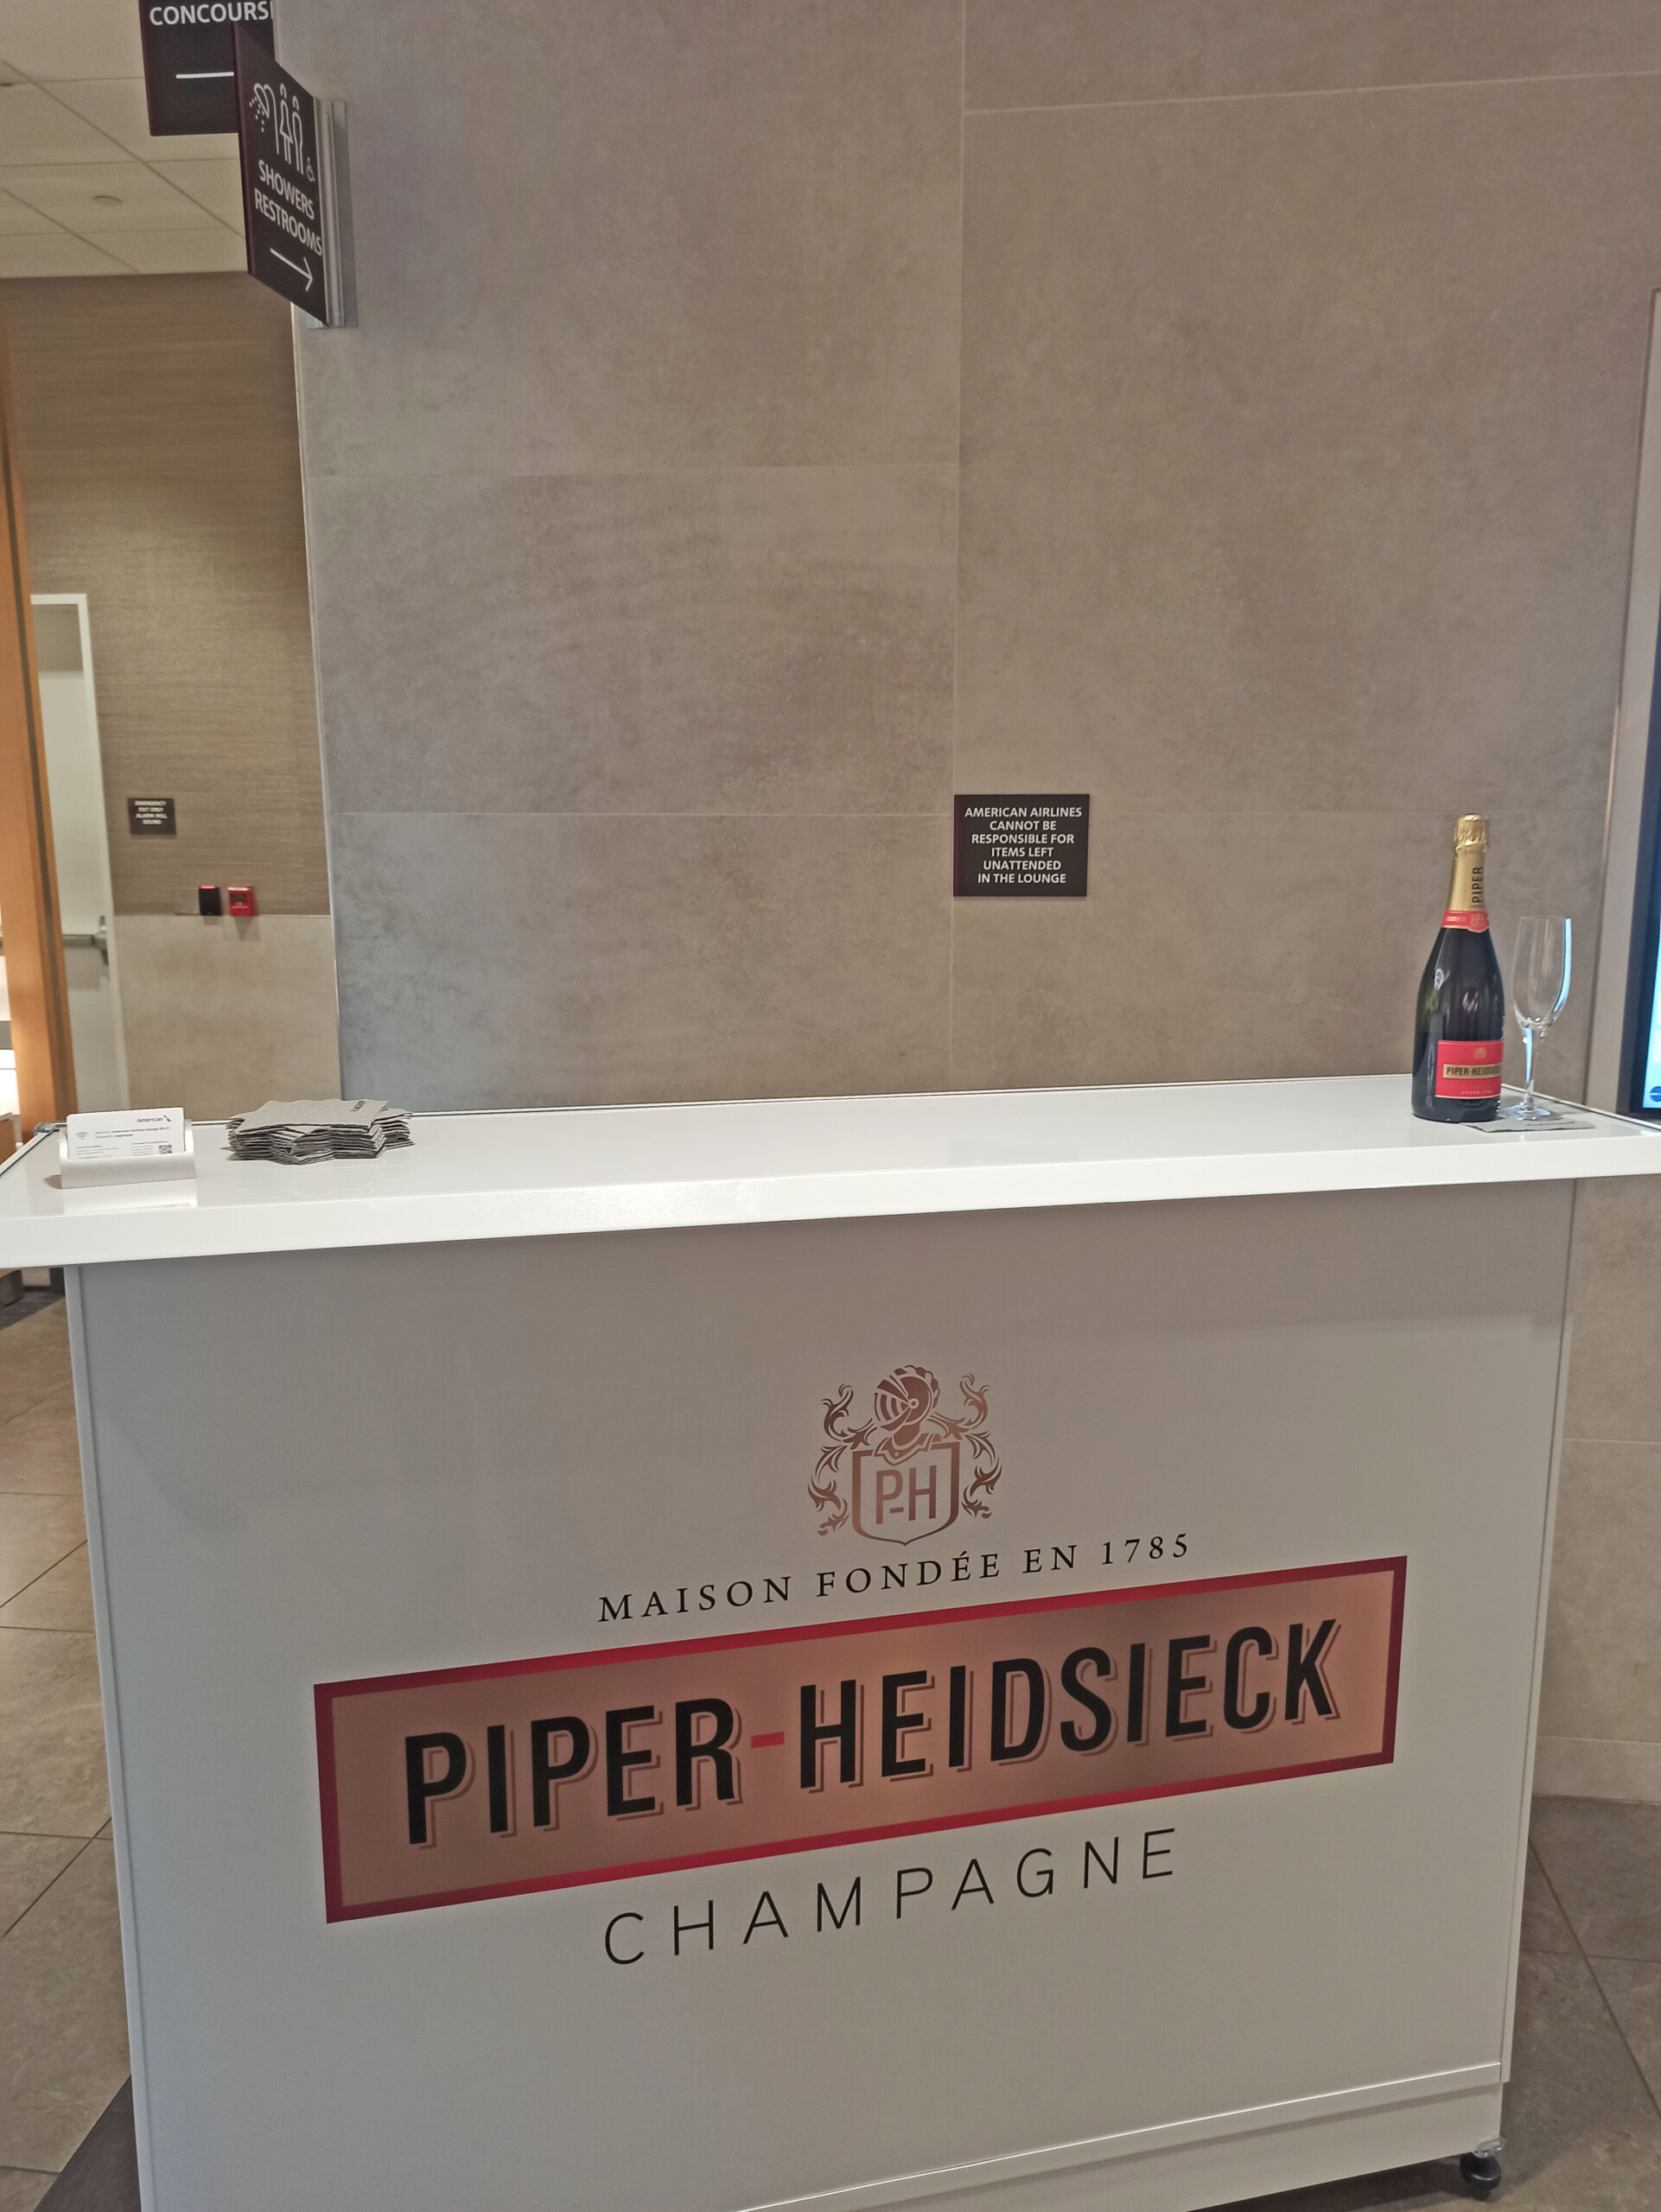 Piper-Heidsieck Champagne